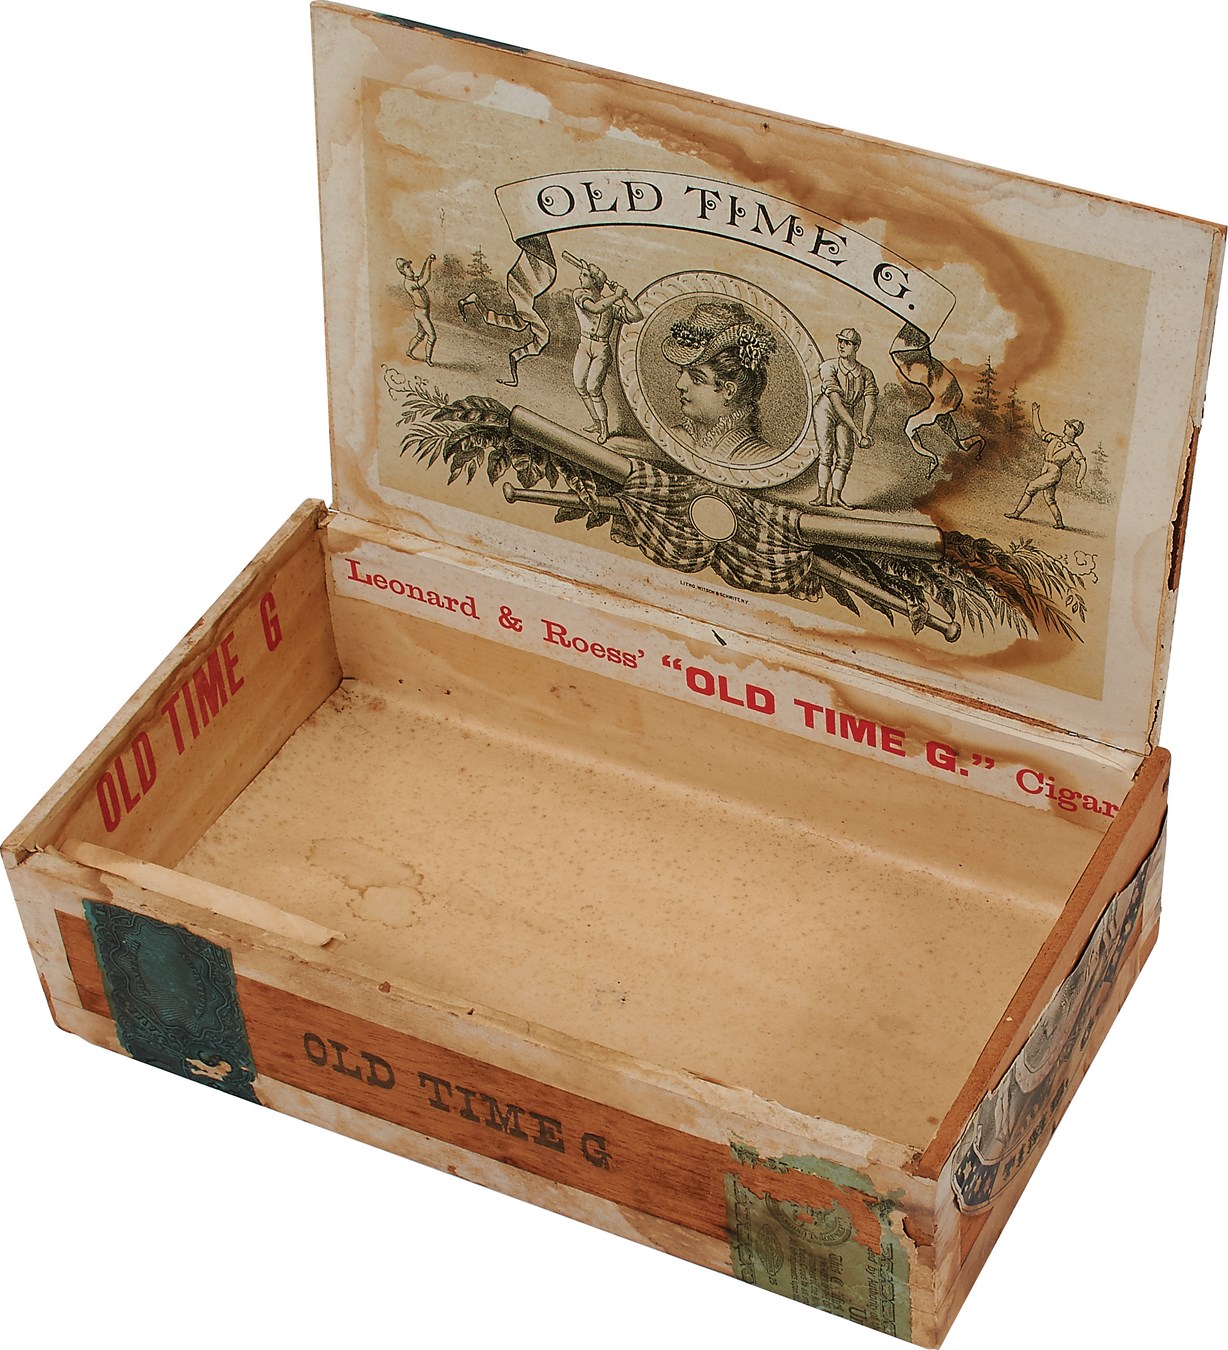 1880 "Old Time G" Baseball Cigar Box